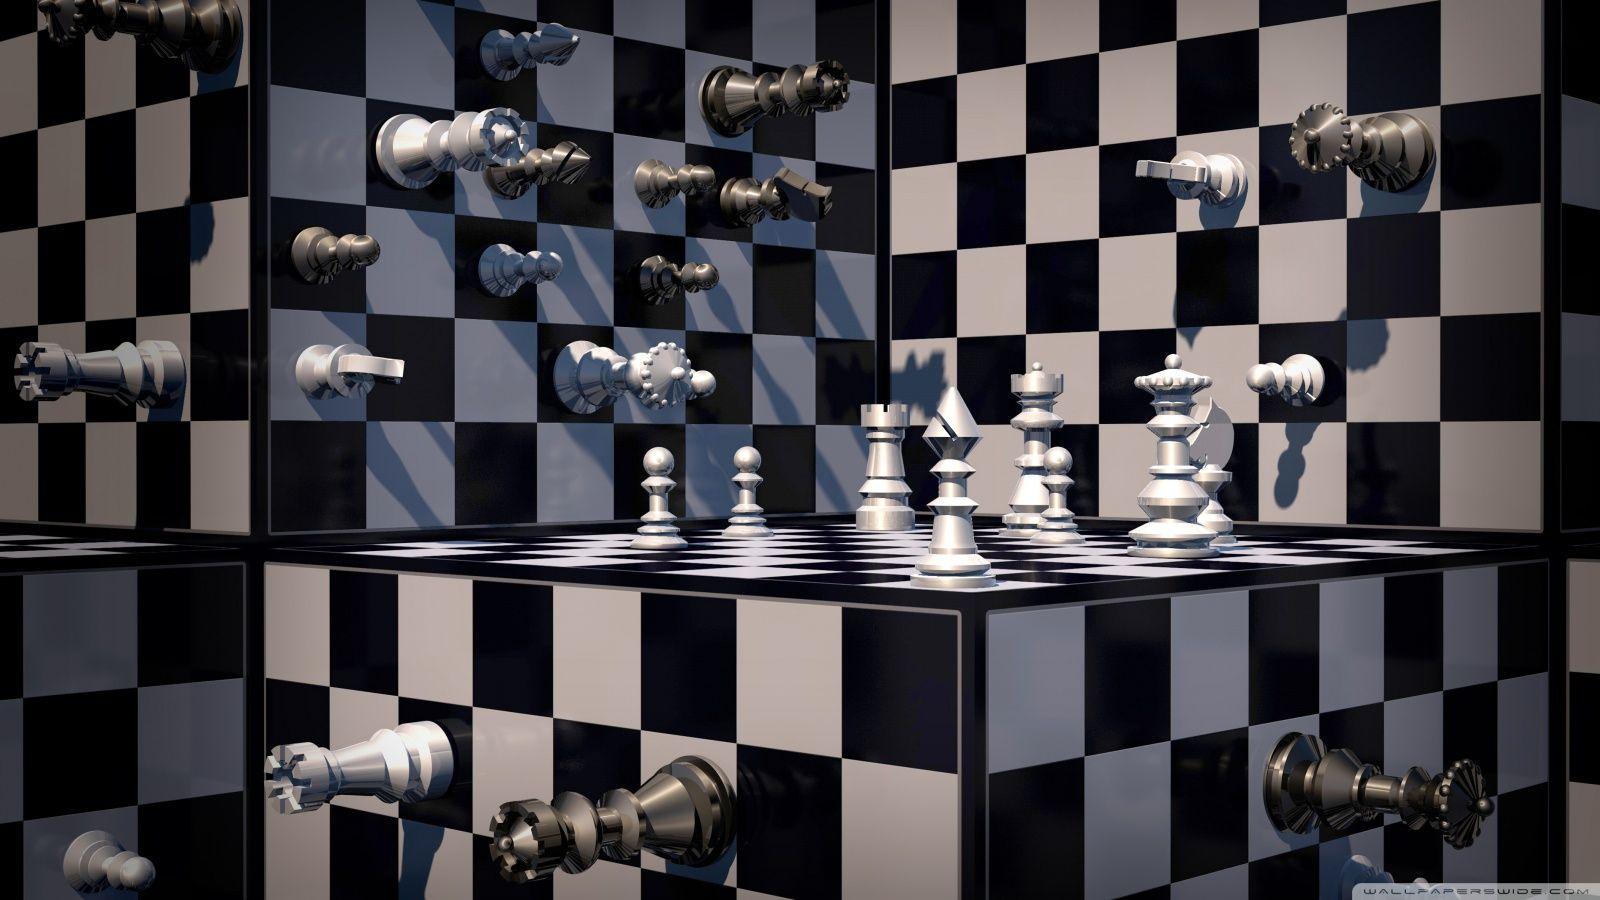 Fantasy Chess Art HD Desktop Wallpaper, Instagram photo, Background